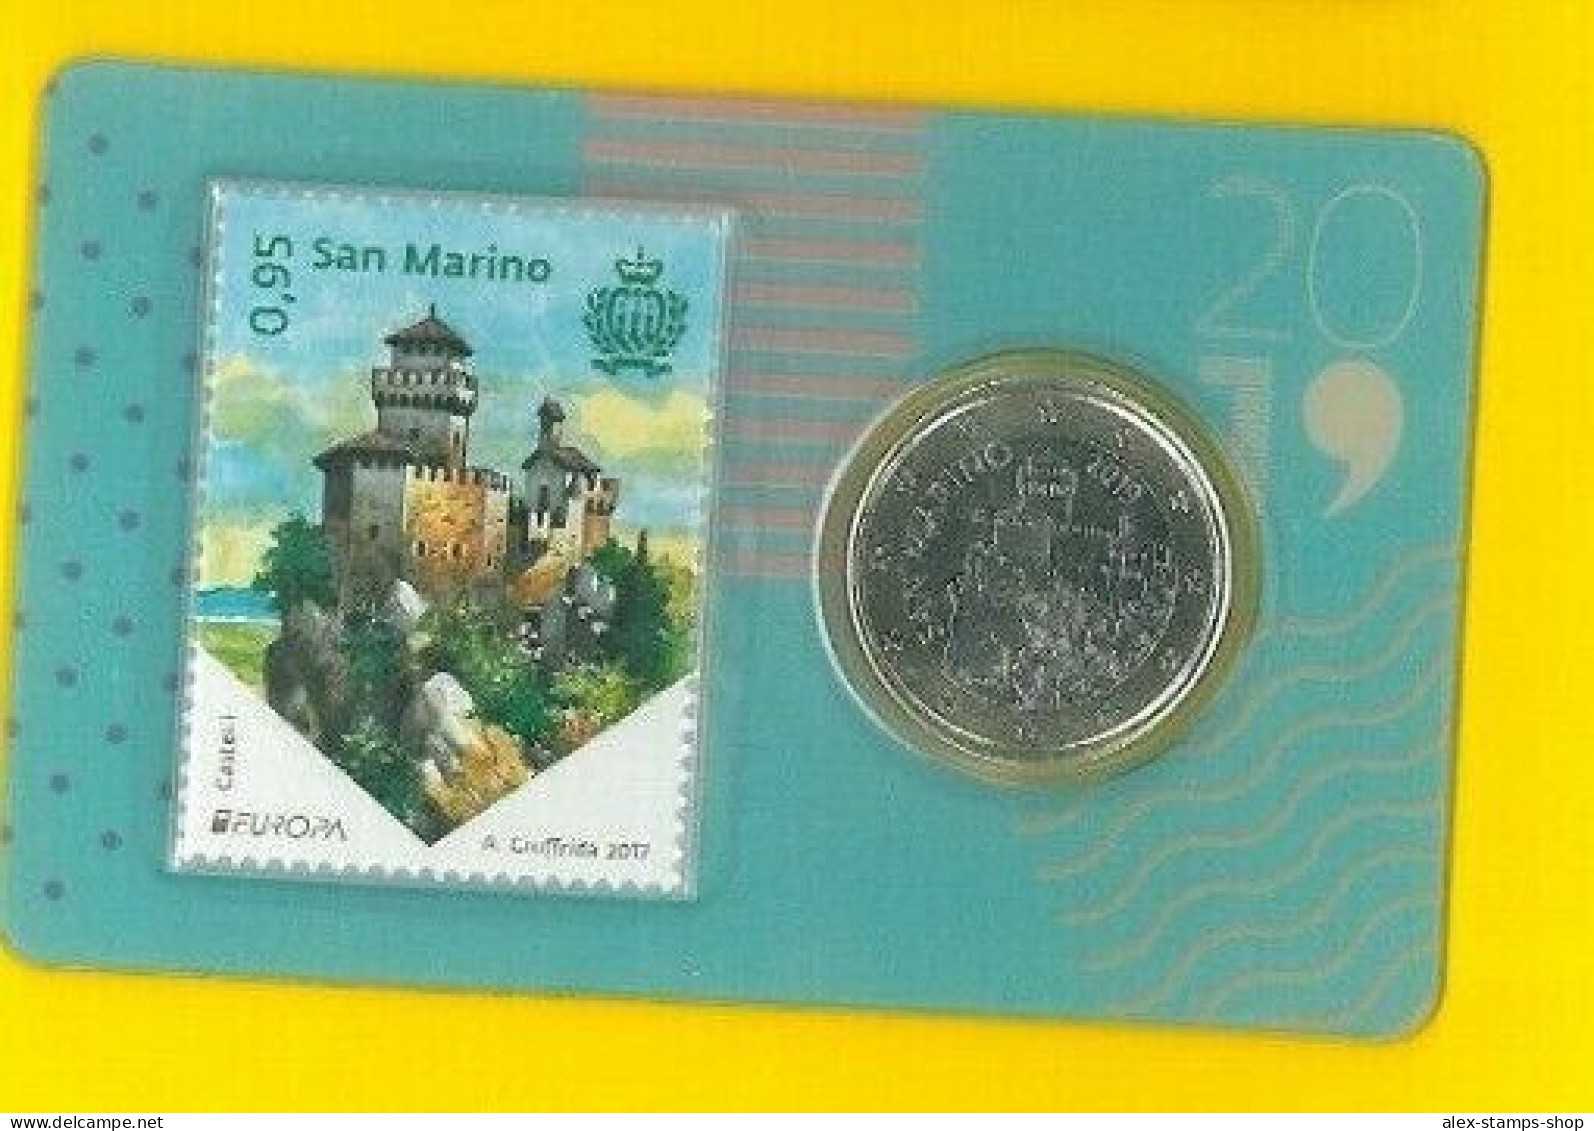 SAN MARINO 2019 STAMP AND COIN CARD N.03 - 2019 FRANCOBOLLO + MONETA 1 EURO - Unused Stamps